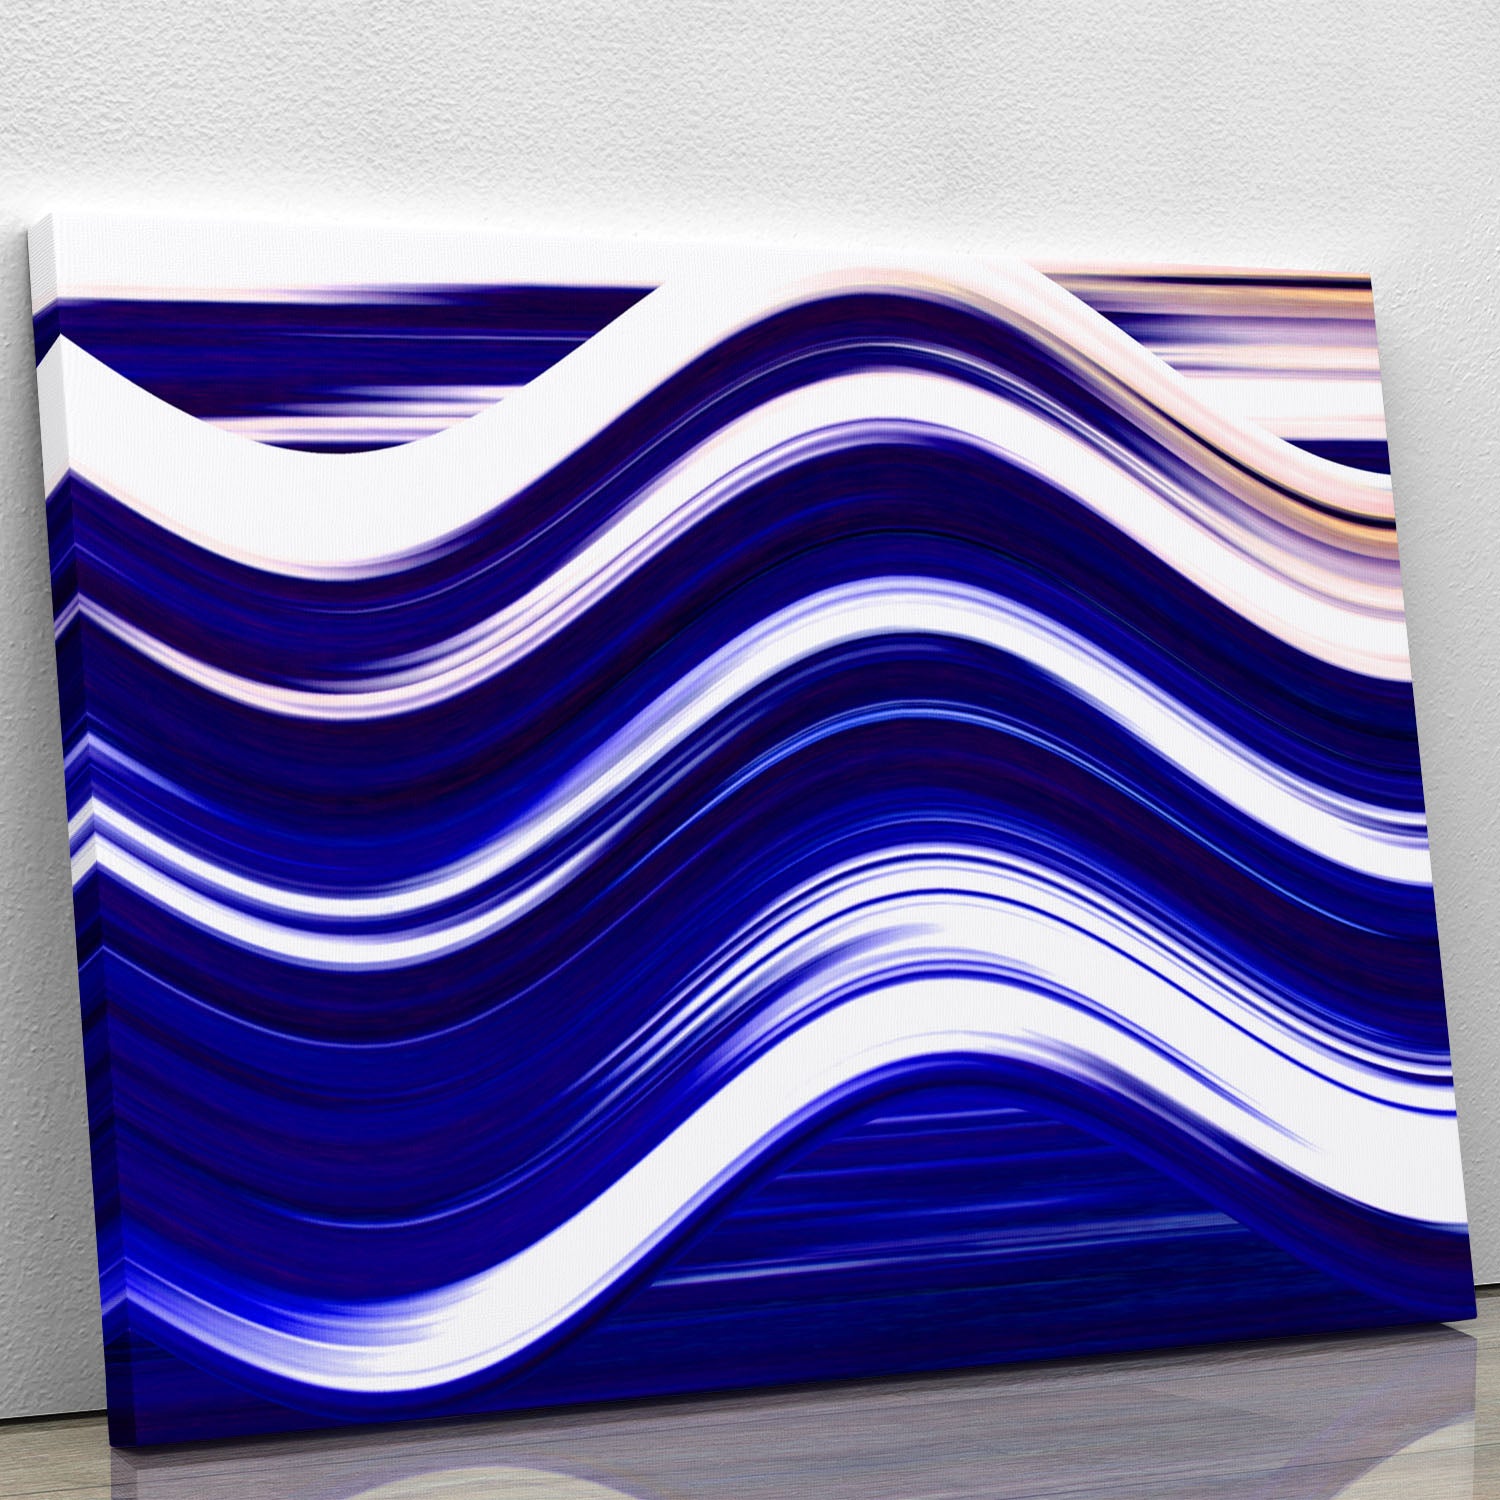 Blue Wave Canvas Print or Poster - Canvas Art Rocks - 1